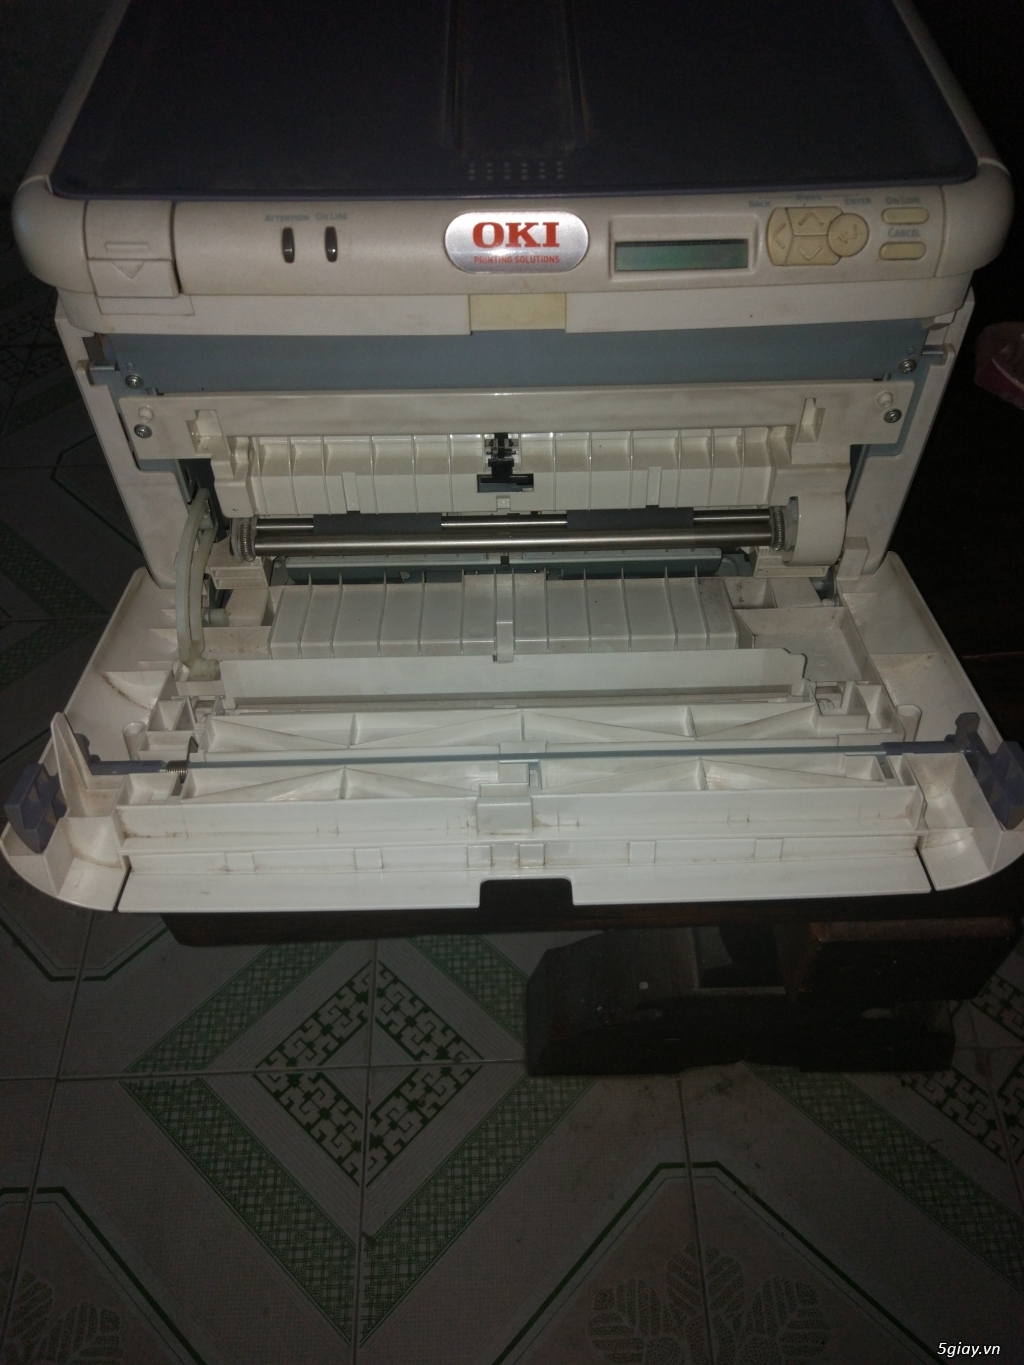 Cần bán: 1 máy in OKI c3600n - 2